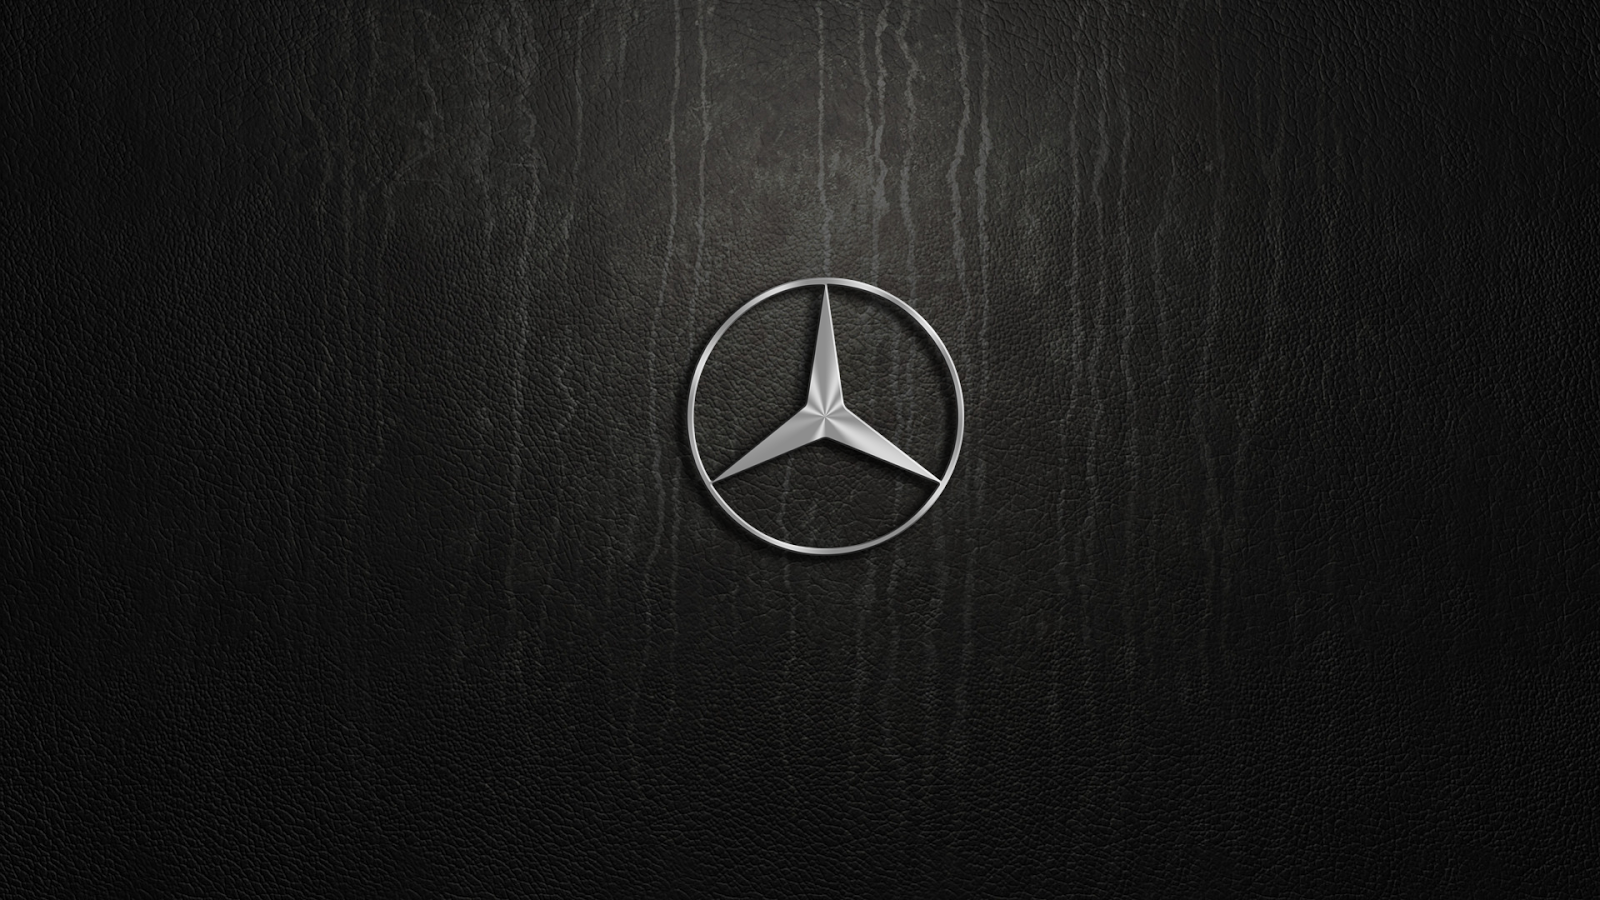 Mercedes Benz Logos In Black Background